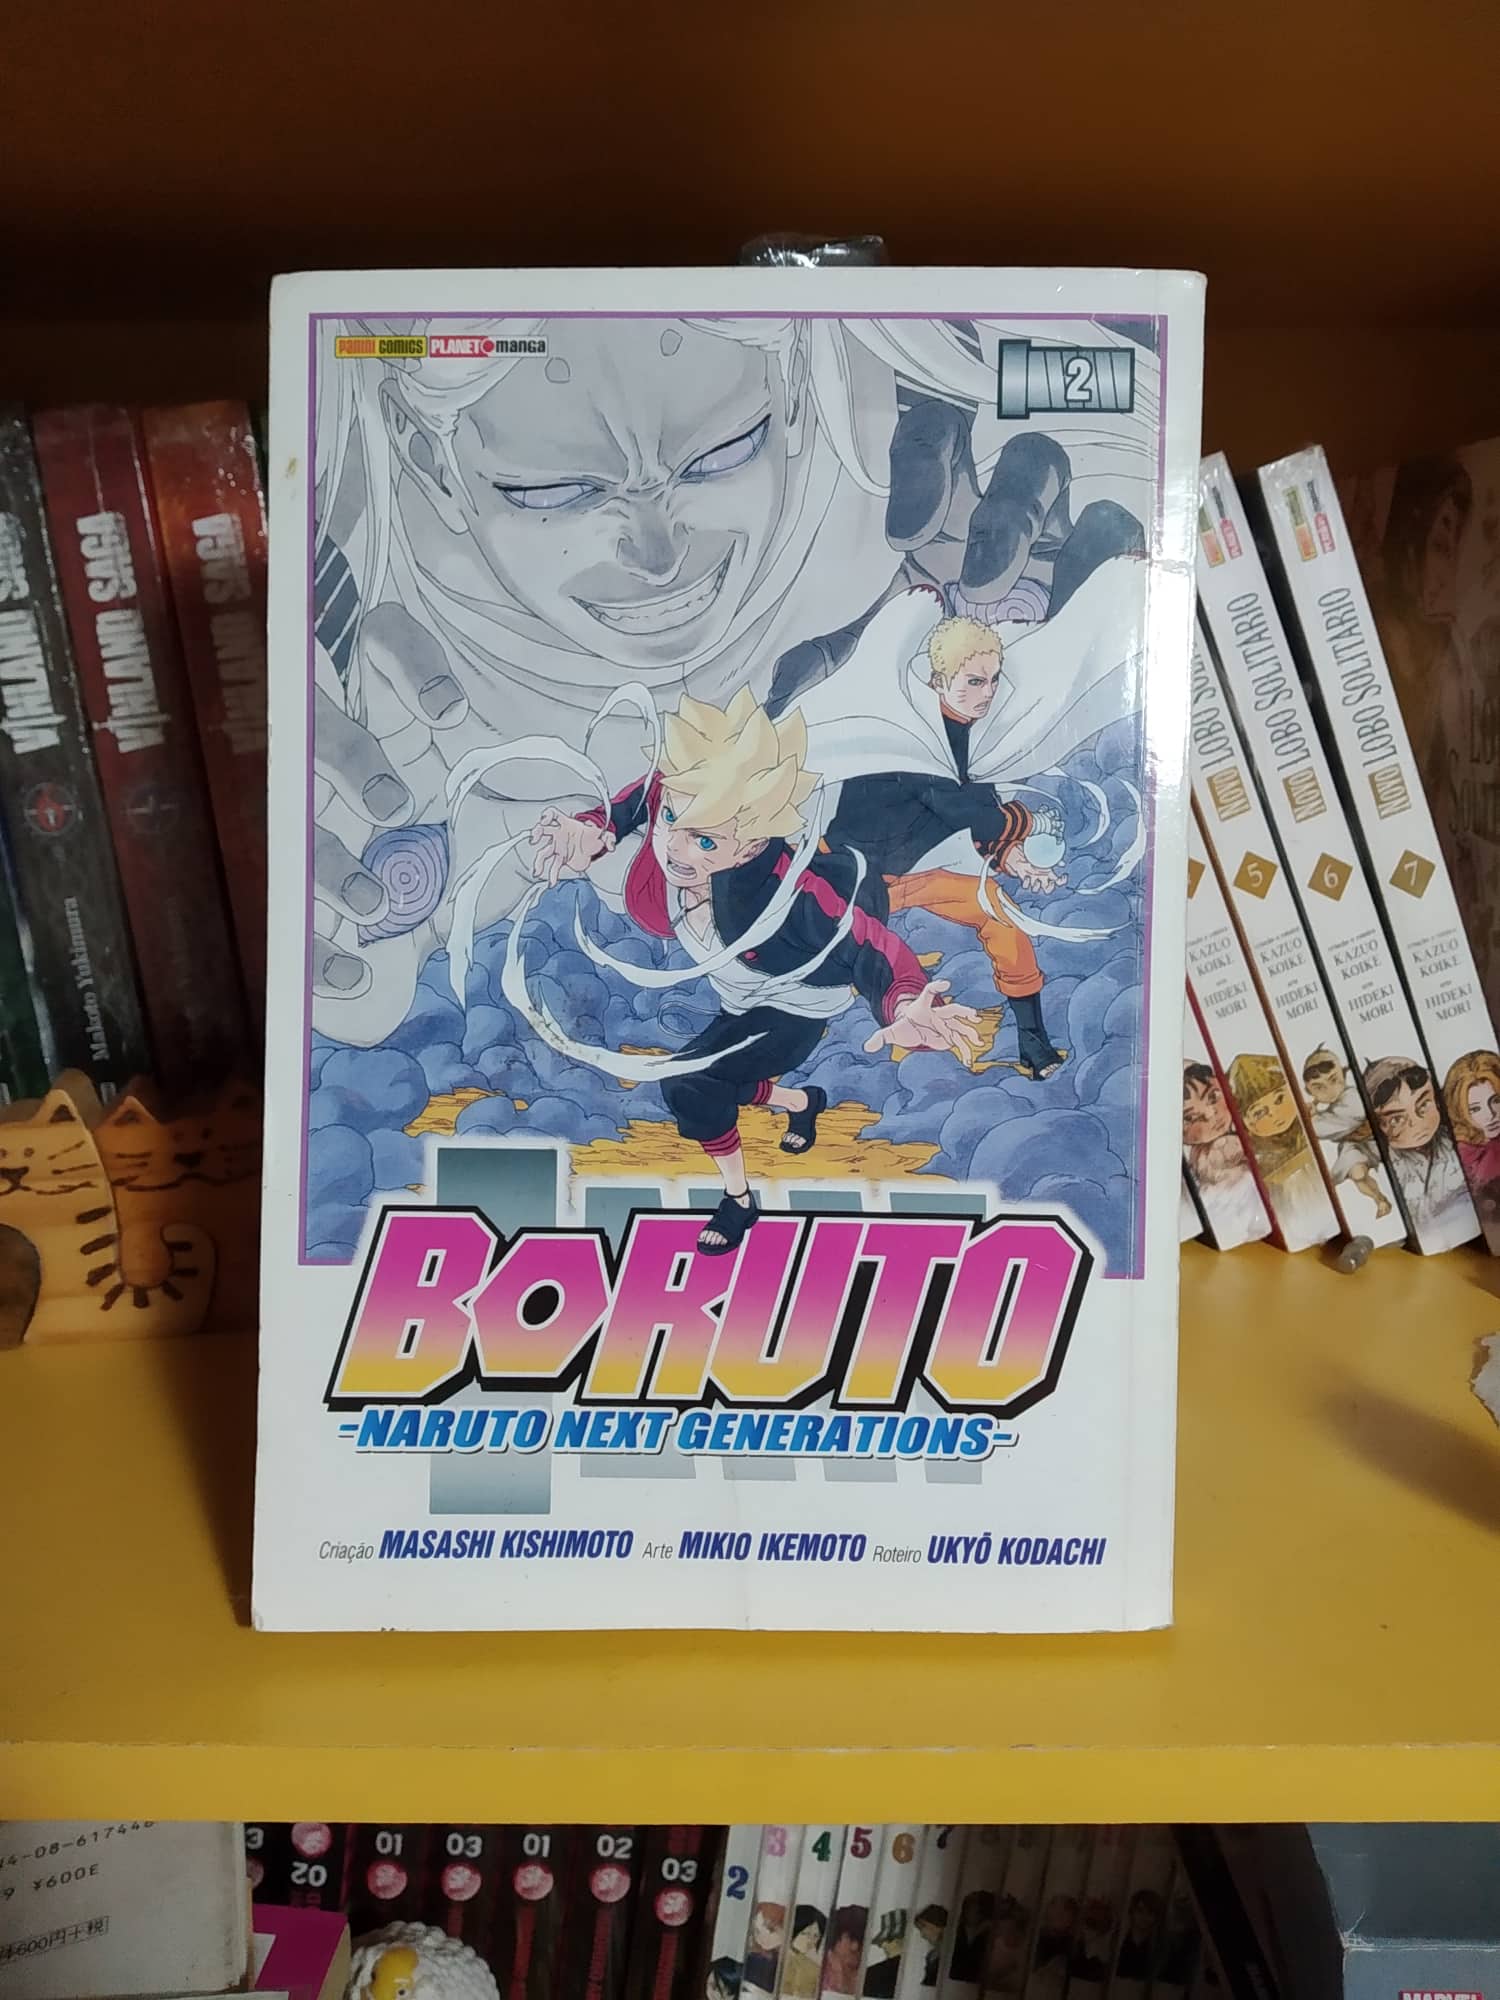 Boruto: Naruto Next Generations, Volume 2